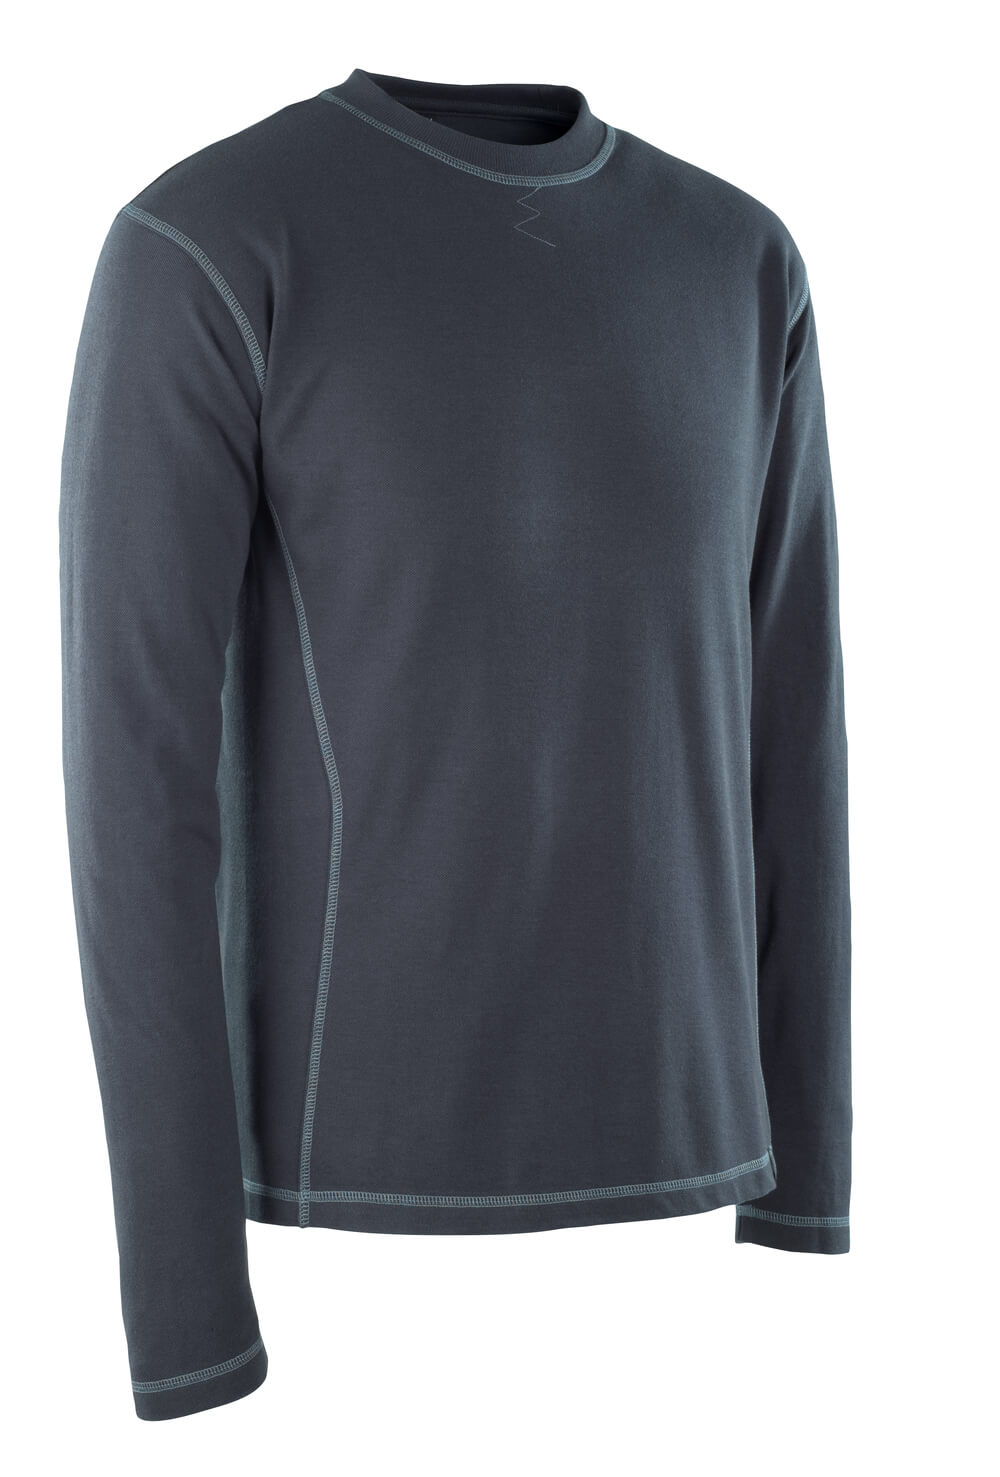 MASCOT® MULTISAFE T-Shirt, Langarm »Muri« Gr. 2XL, schwarzblau - bei HUG Technik ♡